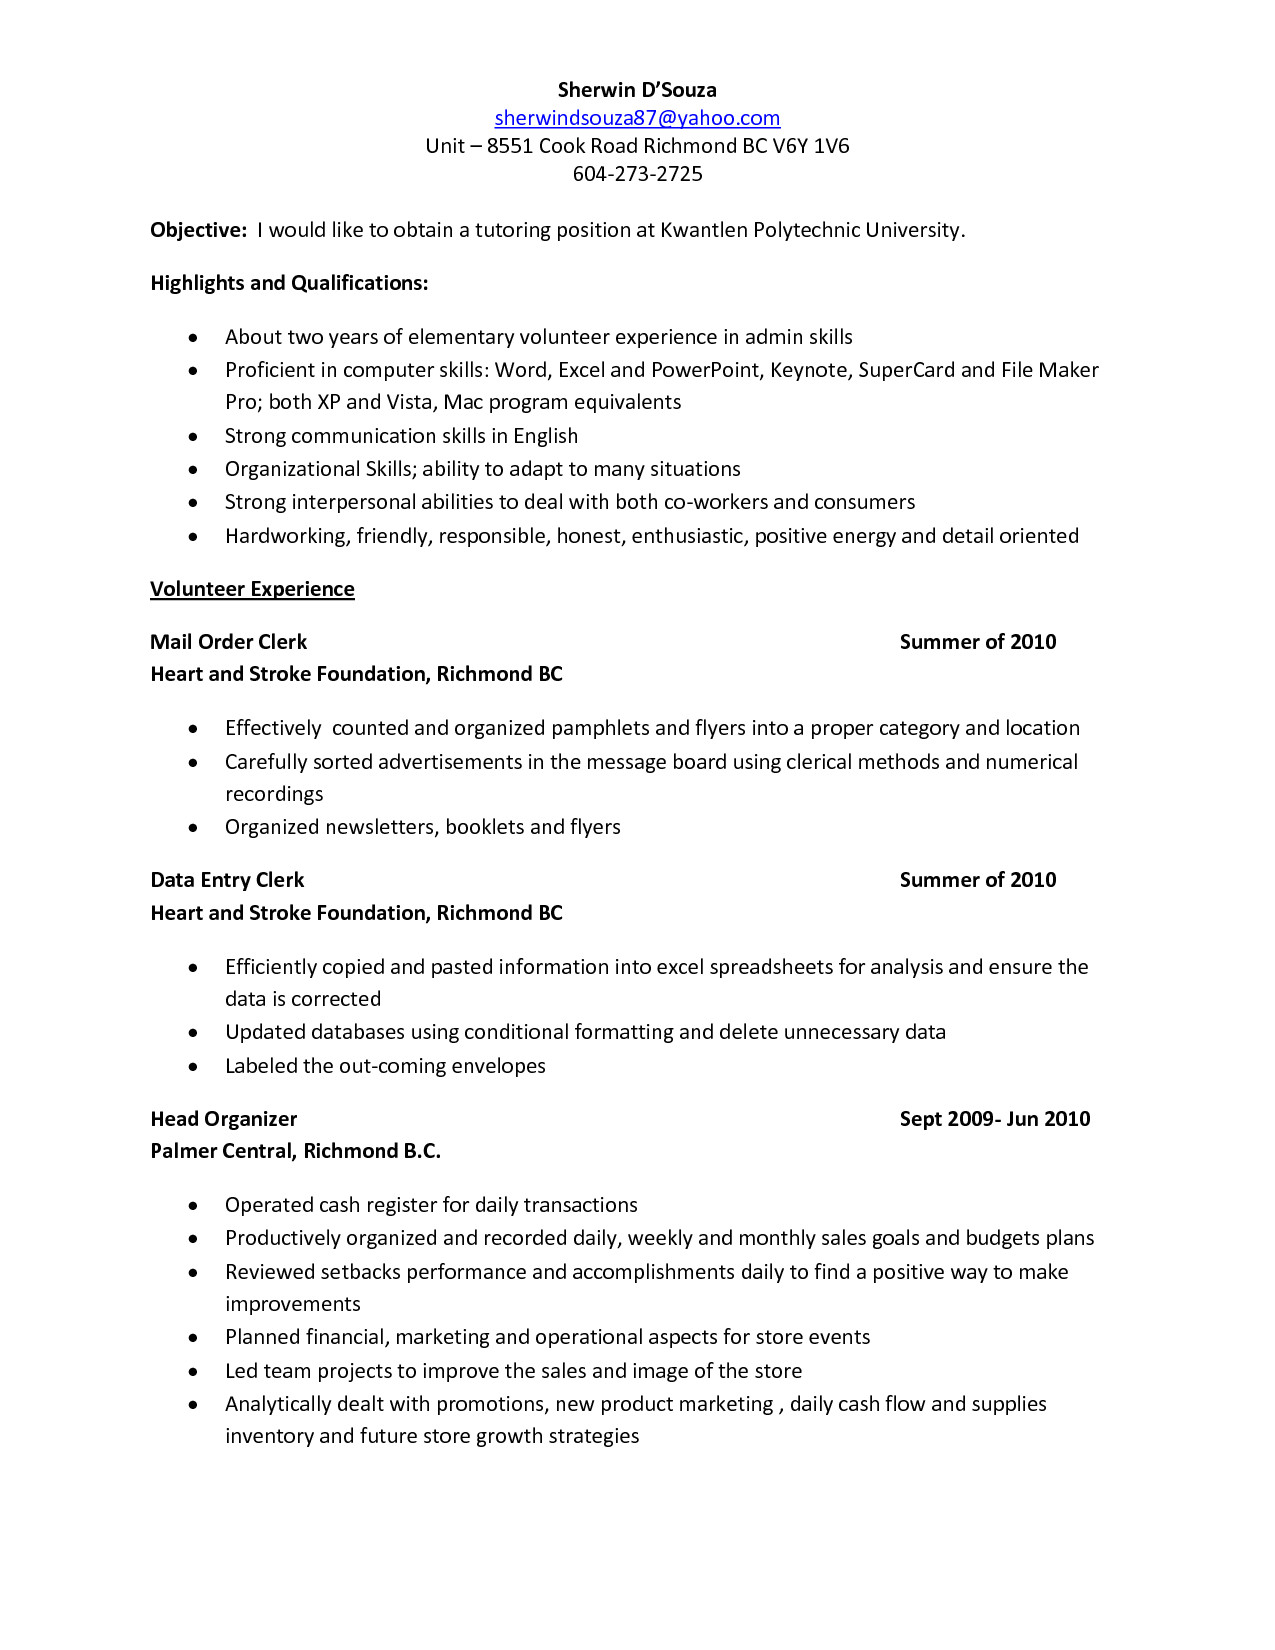 Sample Resume for Tutoring Position Tutor Resume Sample Project Scope Template